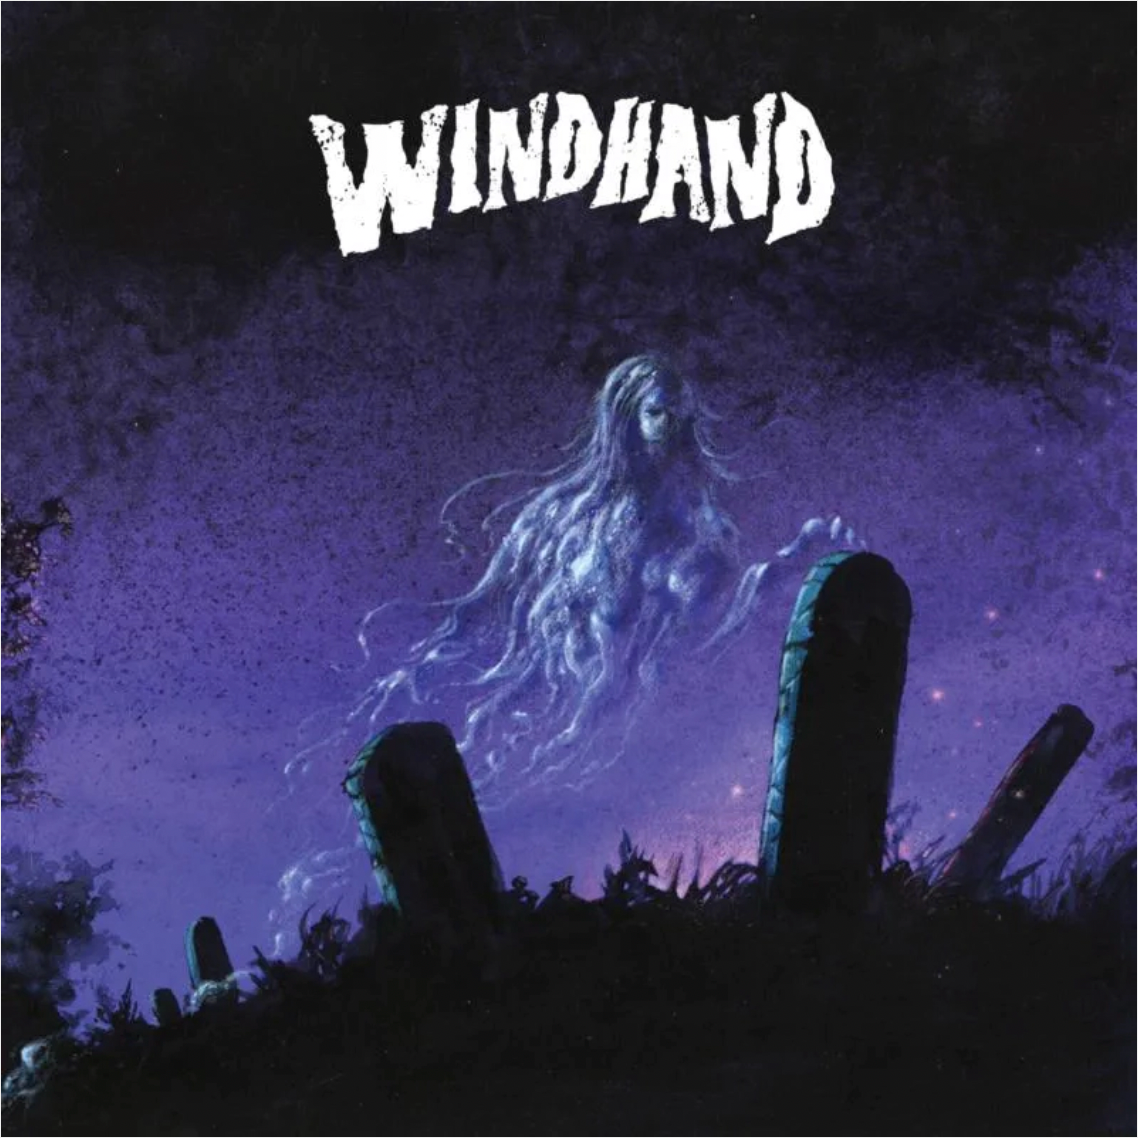 Windhand 'Windhand' 2xLP